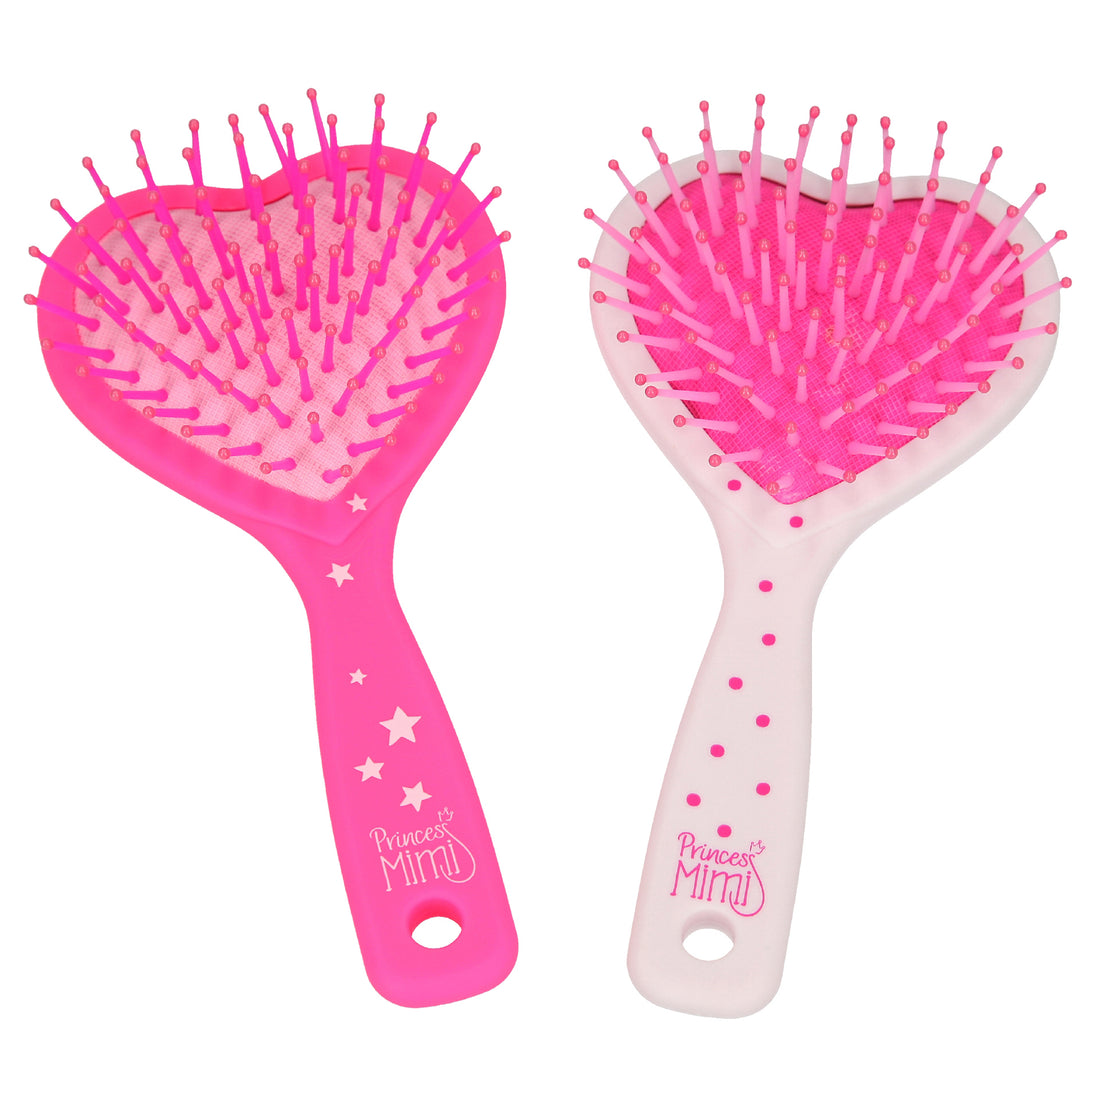 depesche-princess-mimi-hairbrush- (2)